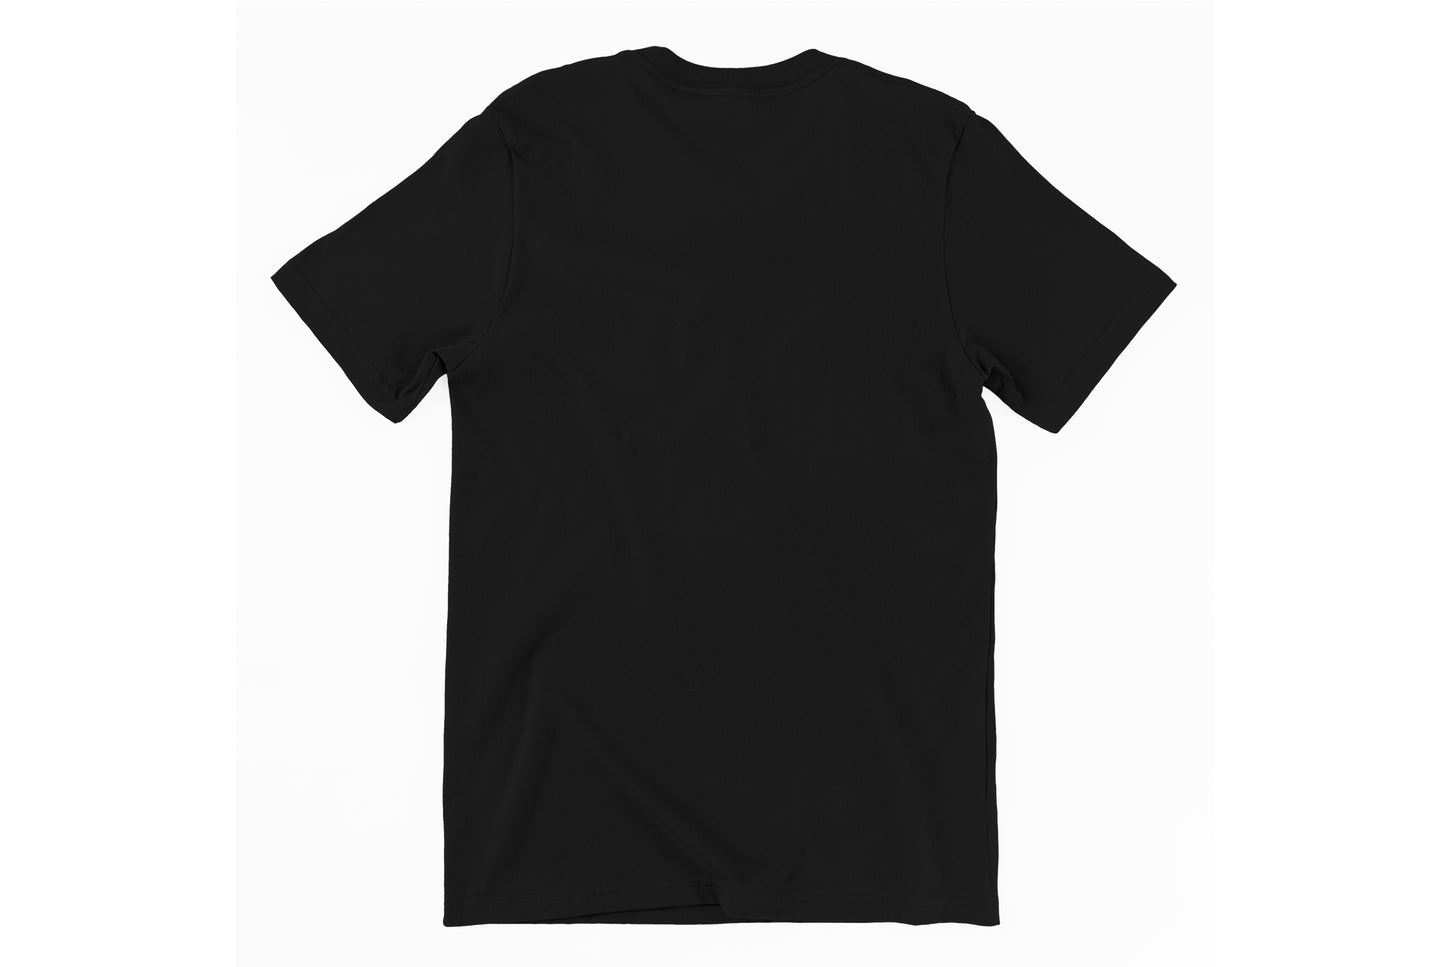 Arteries Silk Screen on Black T-Shirt